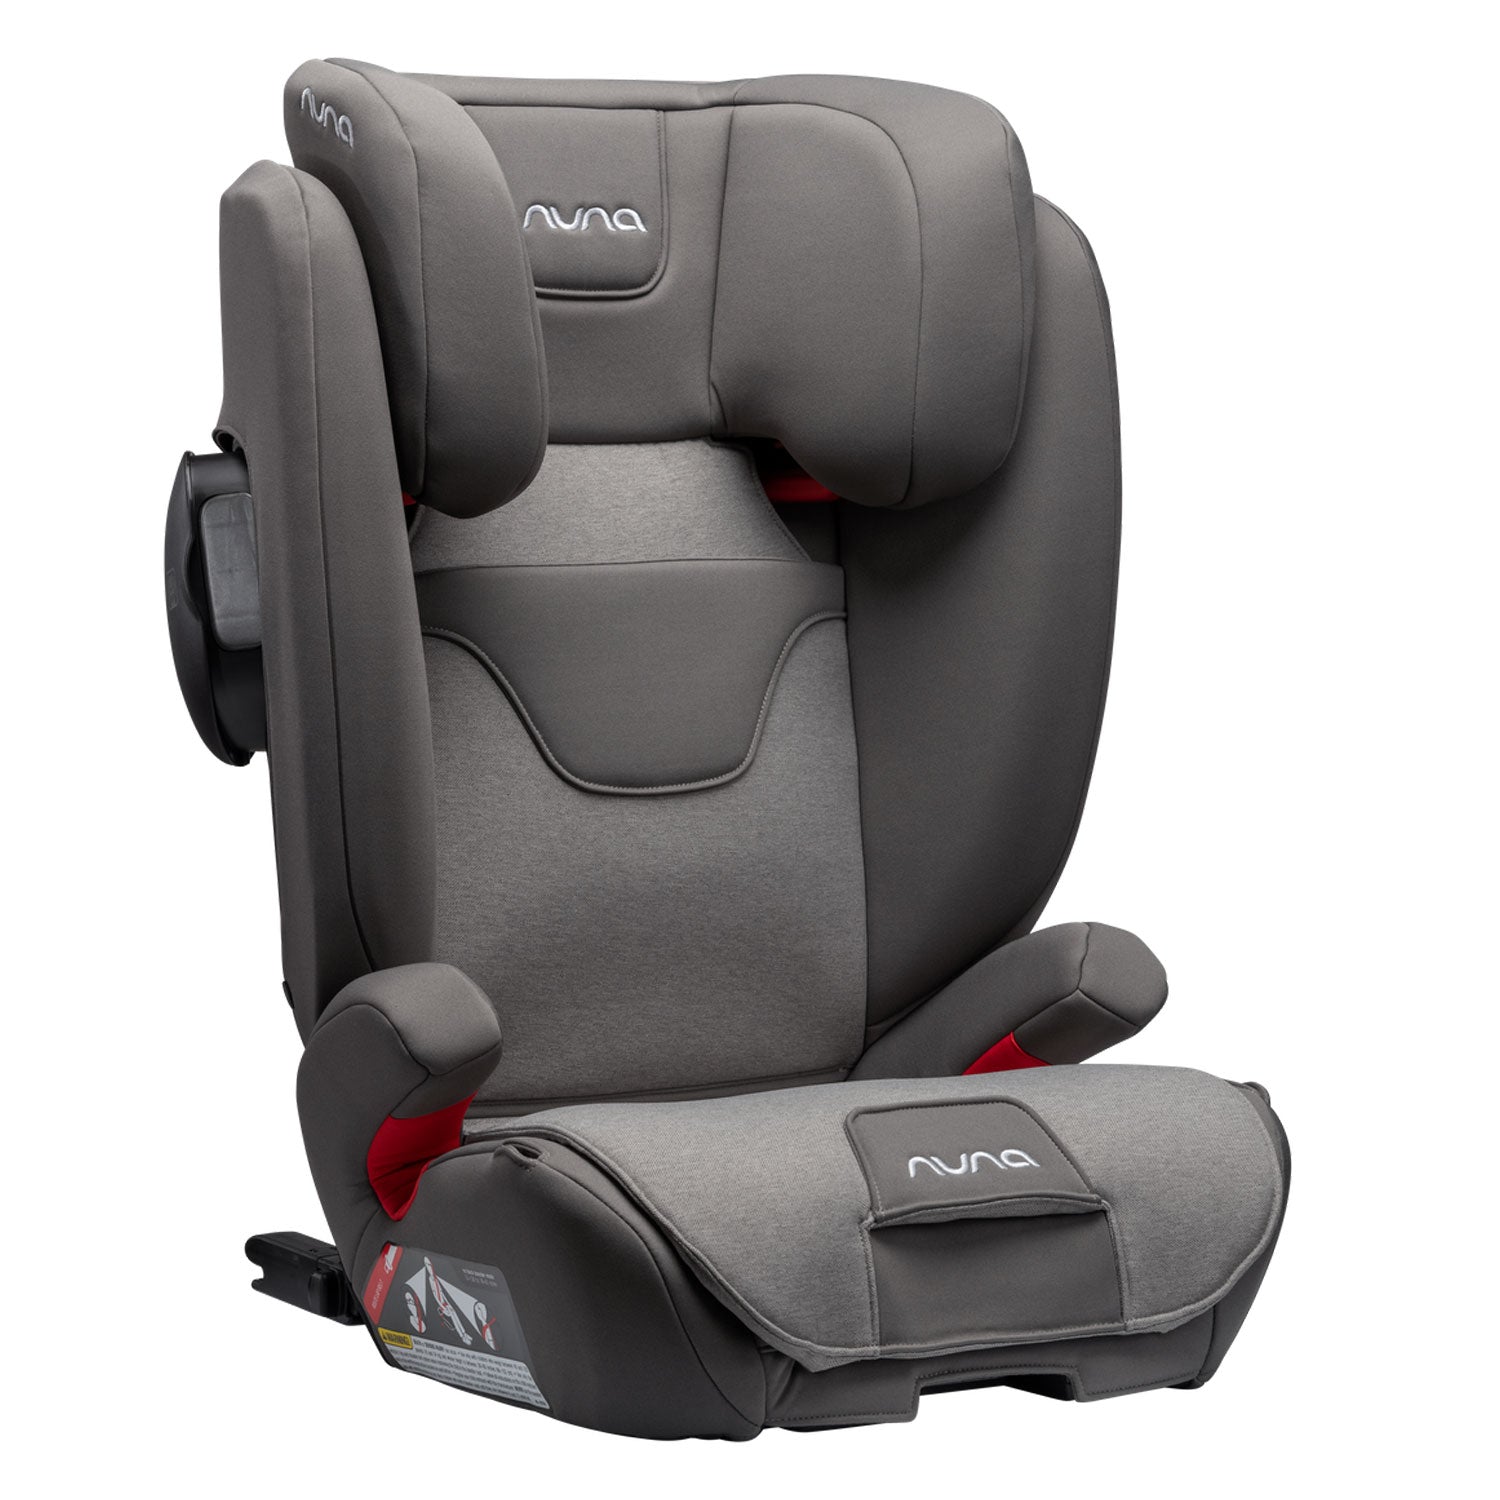 Nuna AACE Combination Booster Car Seat - Granite